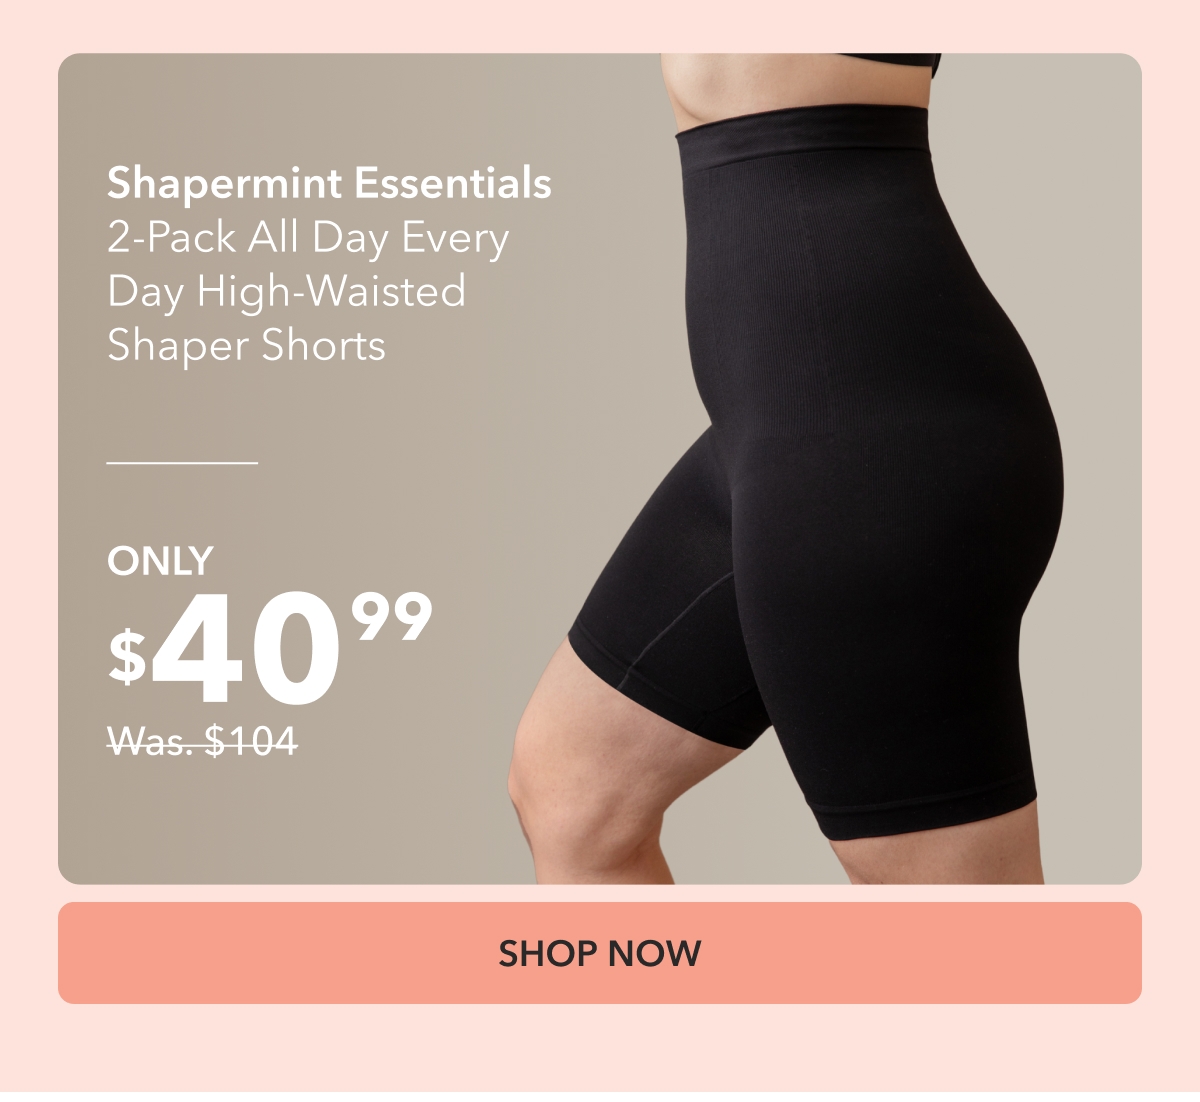 Shapermint Essentials High-Waisted Shaper Shorts